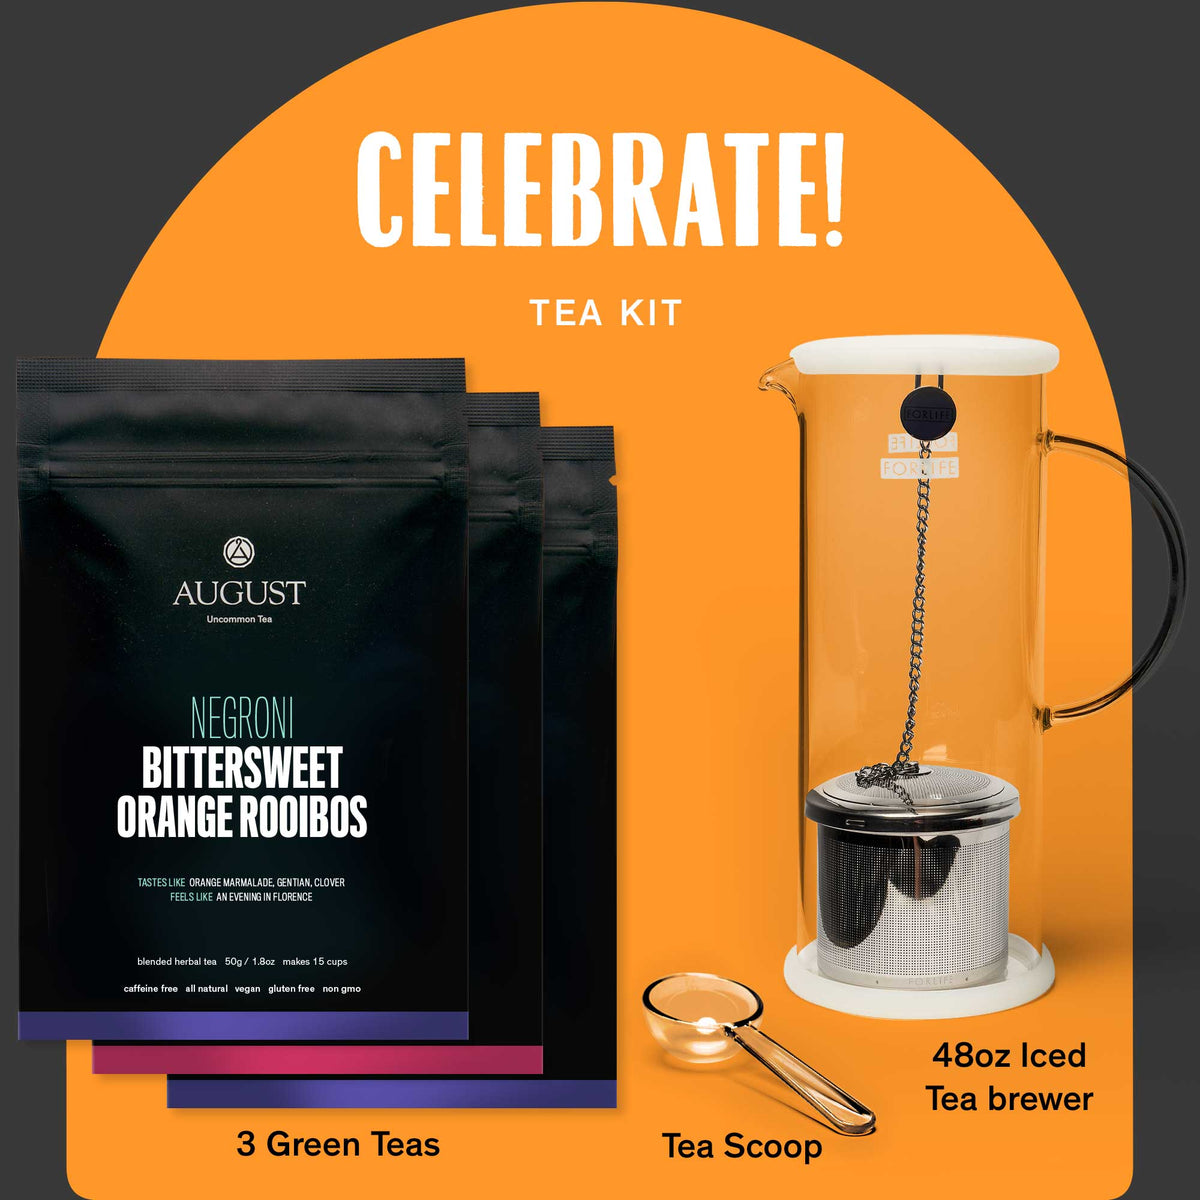 Celebrate! Tea Kit